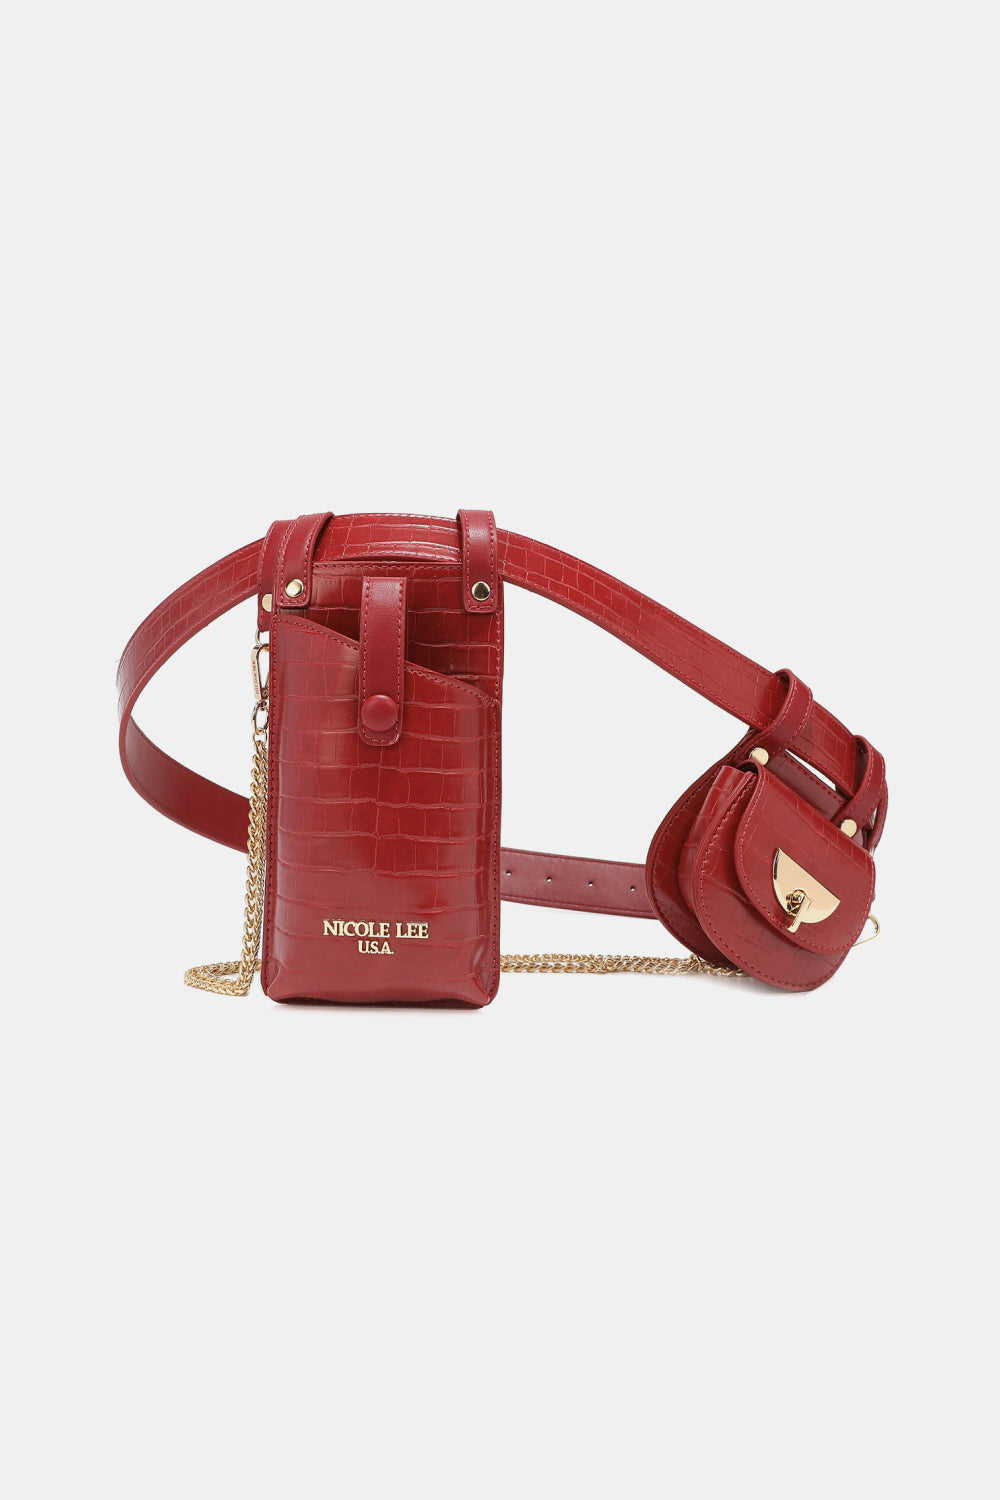 Nicole Lee USA Phone Case Vegan Leather Cell Phone Case & Pouch Aurelia Waist Belt Various Colors, Black, Red, Olive, Chestnut